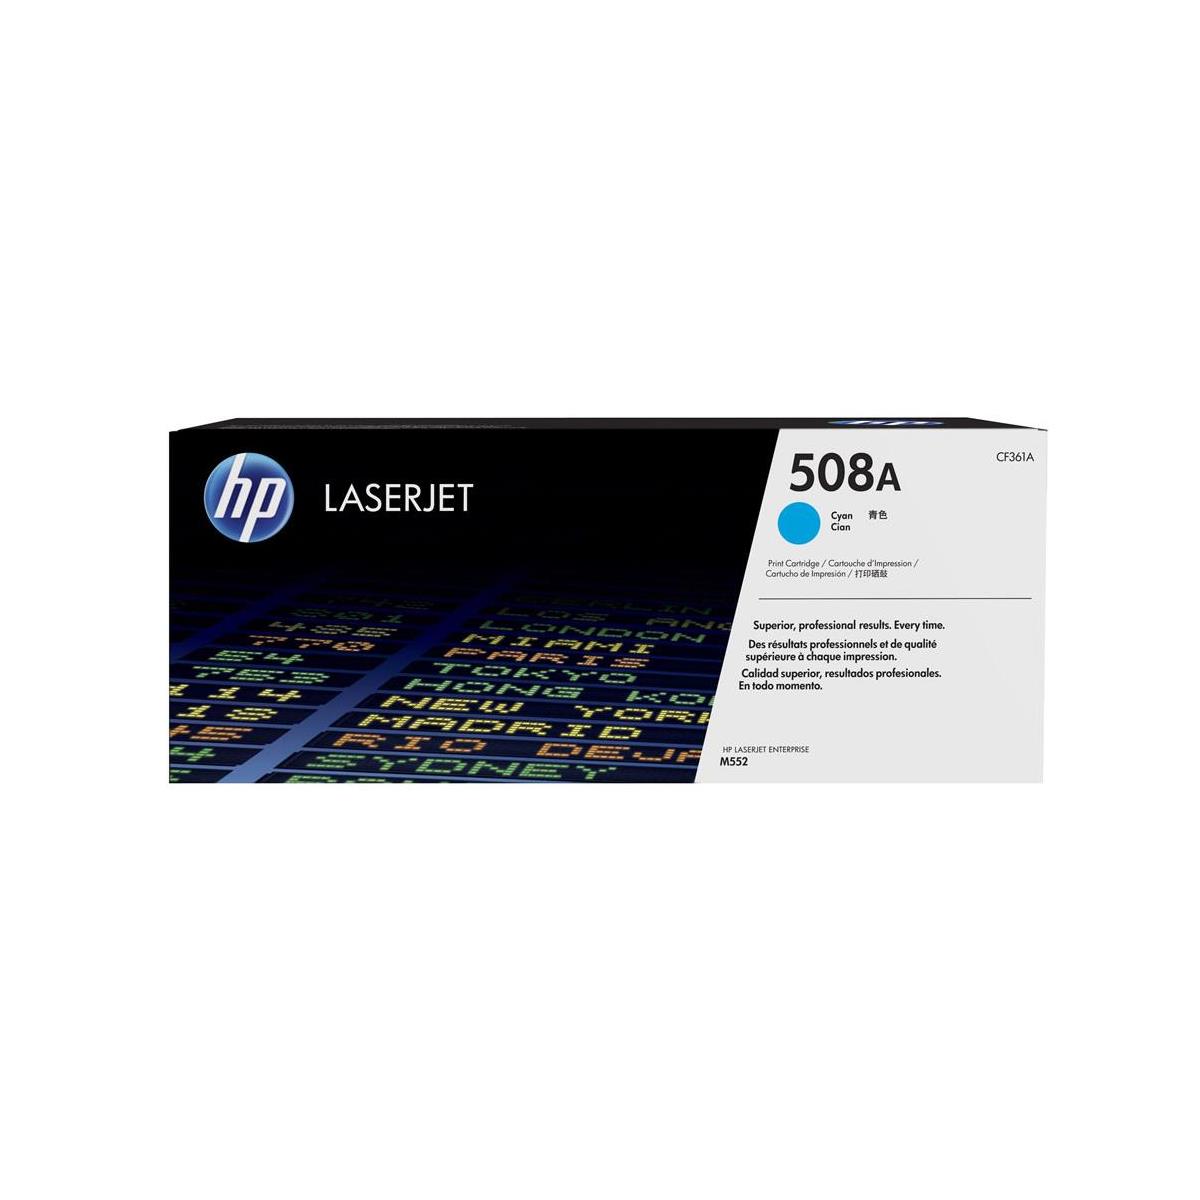 

HP 508A Toner Cartridge (OEM) for LaserJet Enterprise M552 Printer, Cyan